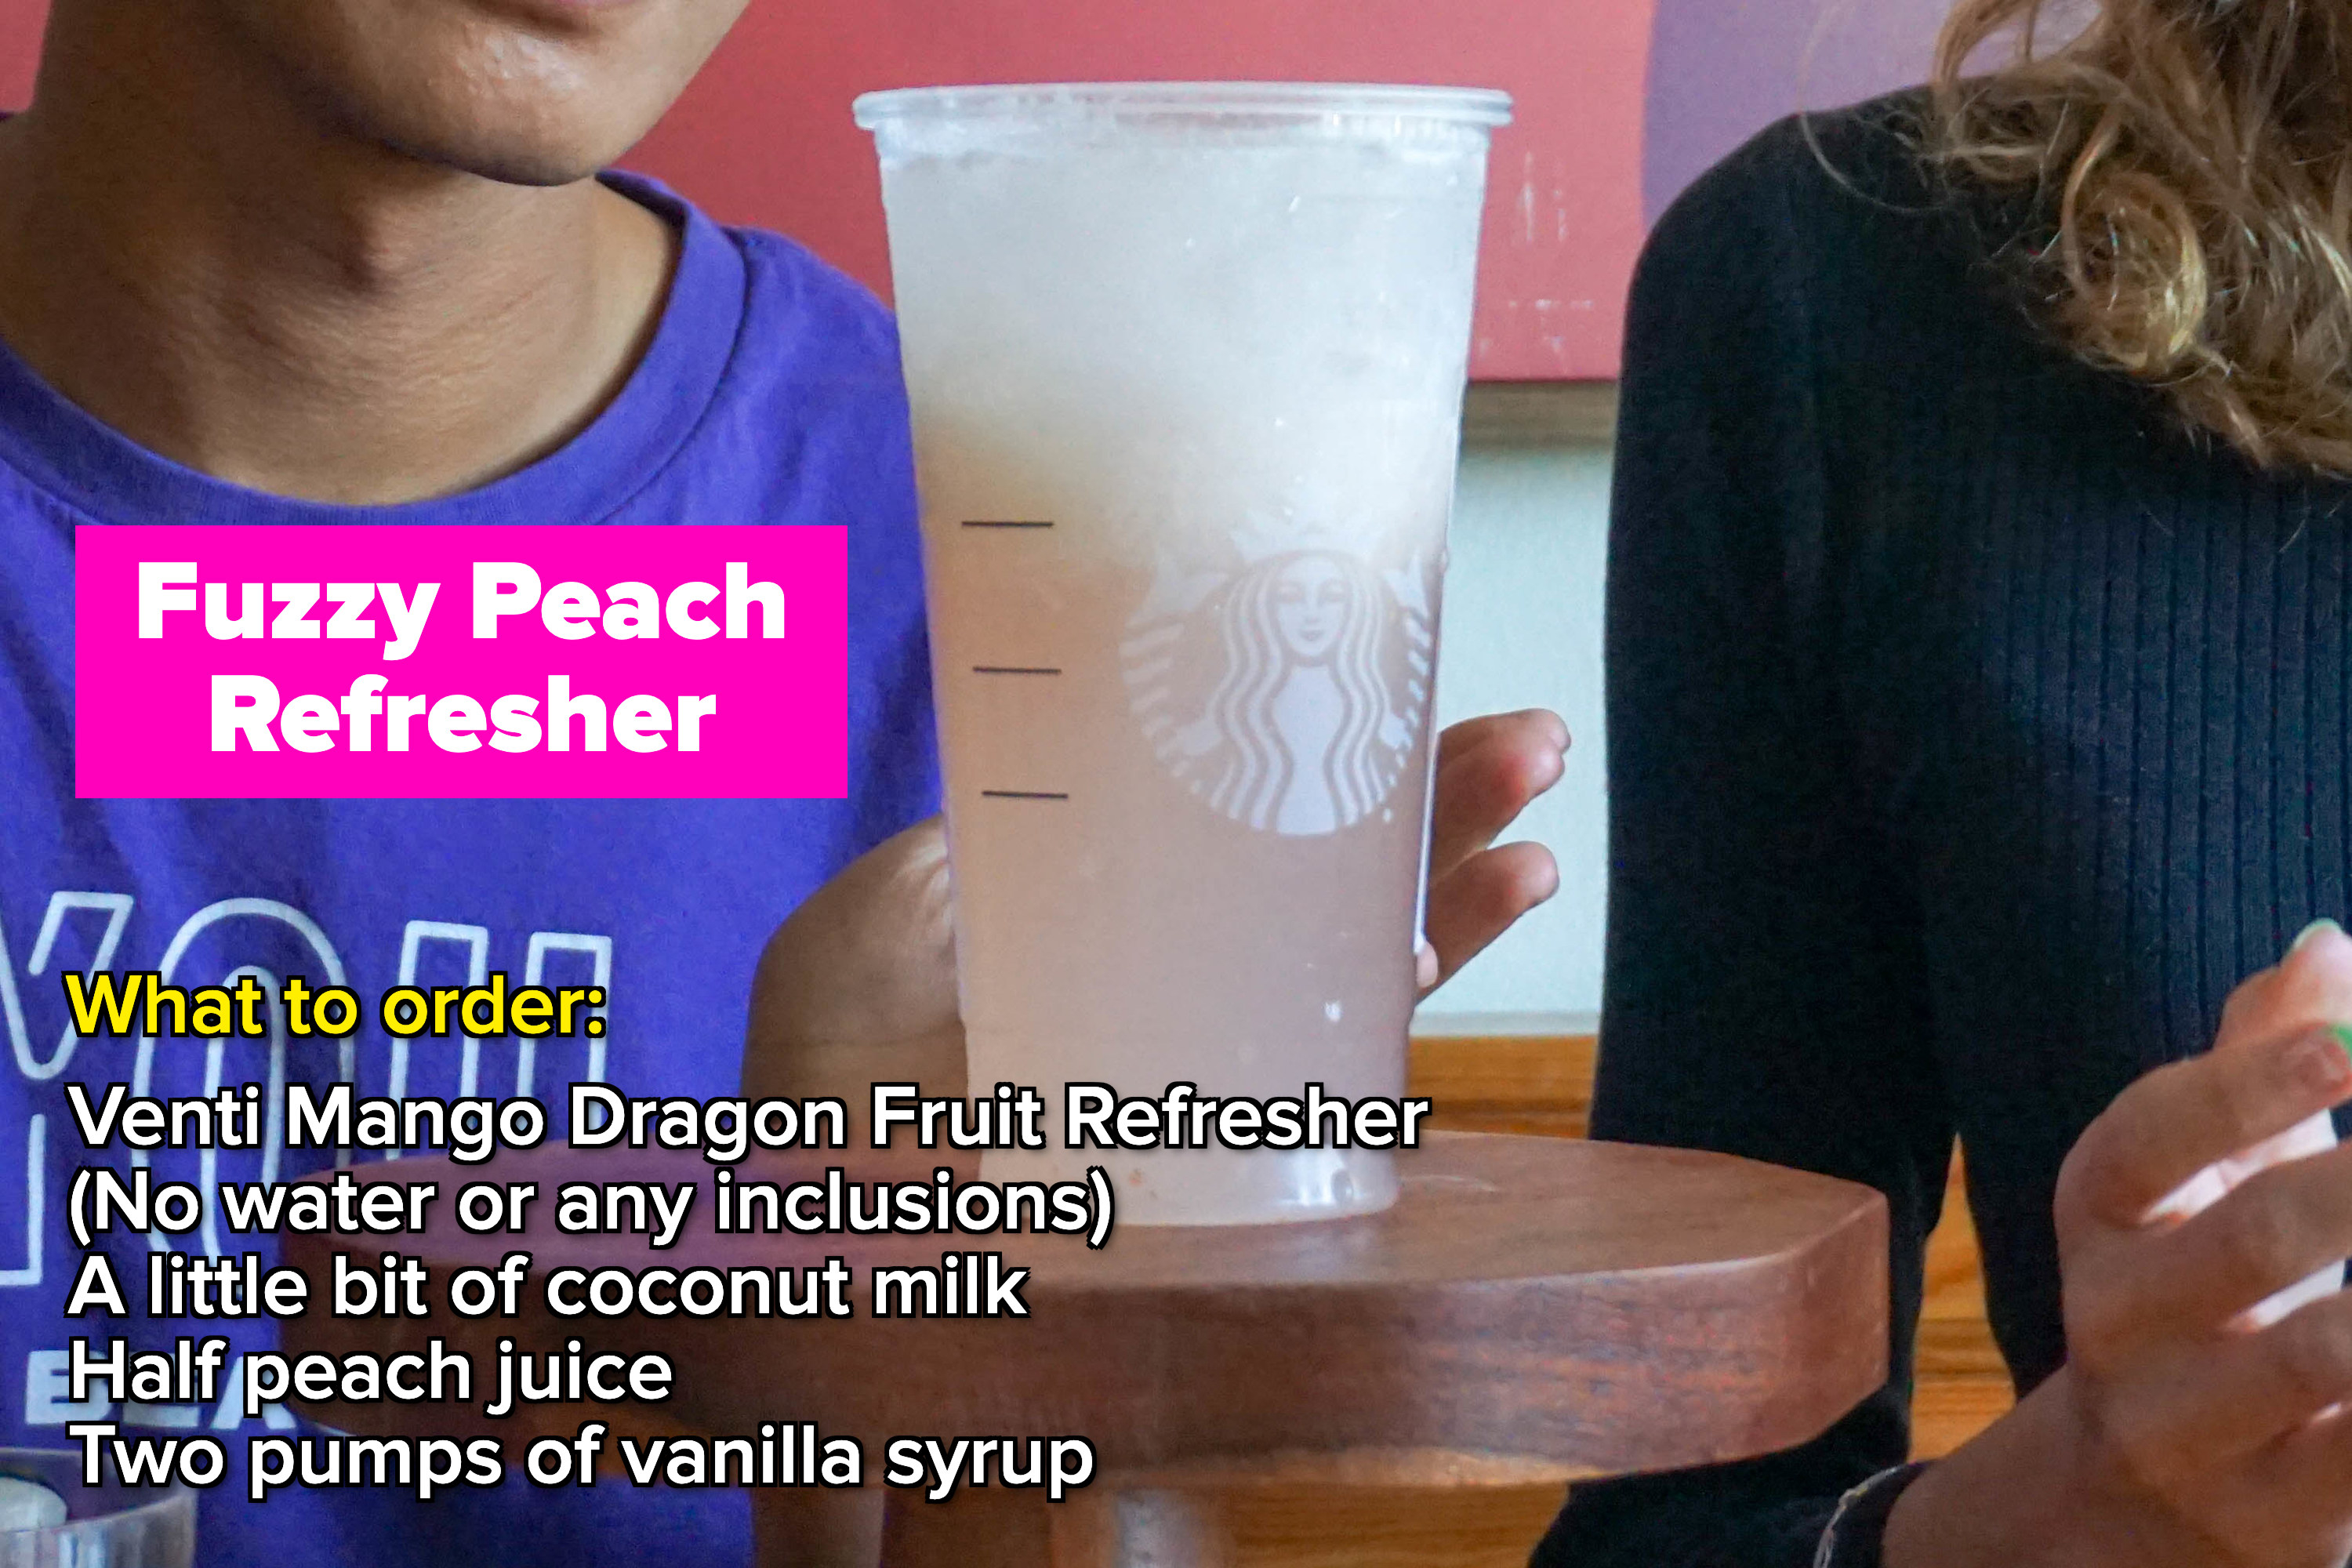 Starbucks Fuzzy Peach Refresher Drink